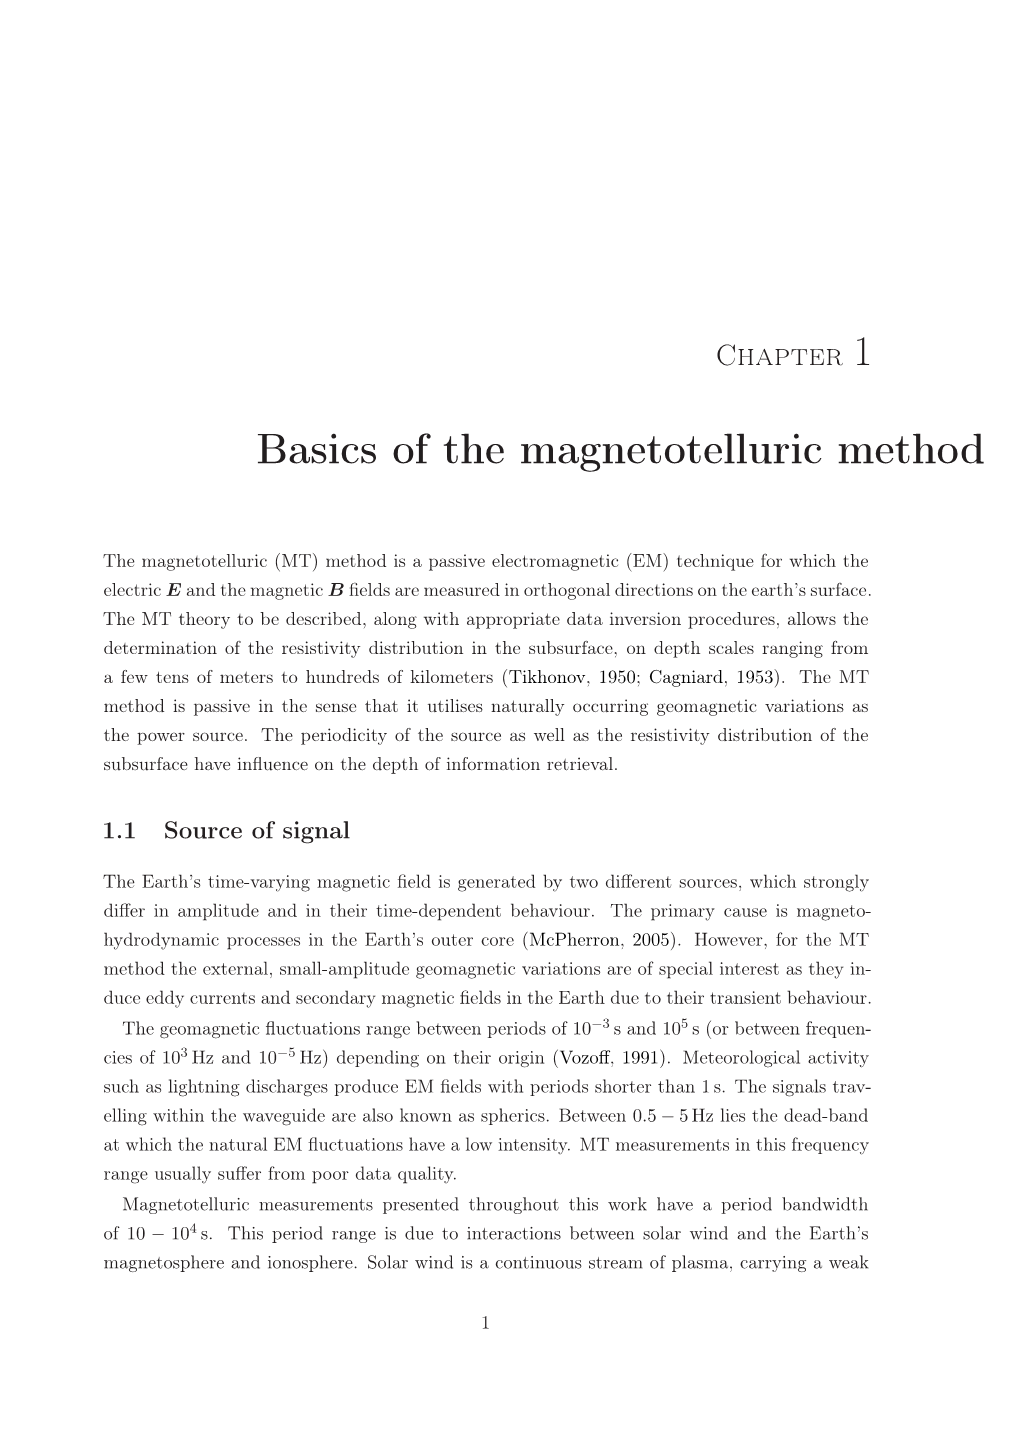 Basics of the Magnetotelluric Method